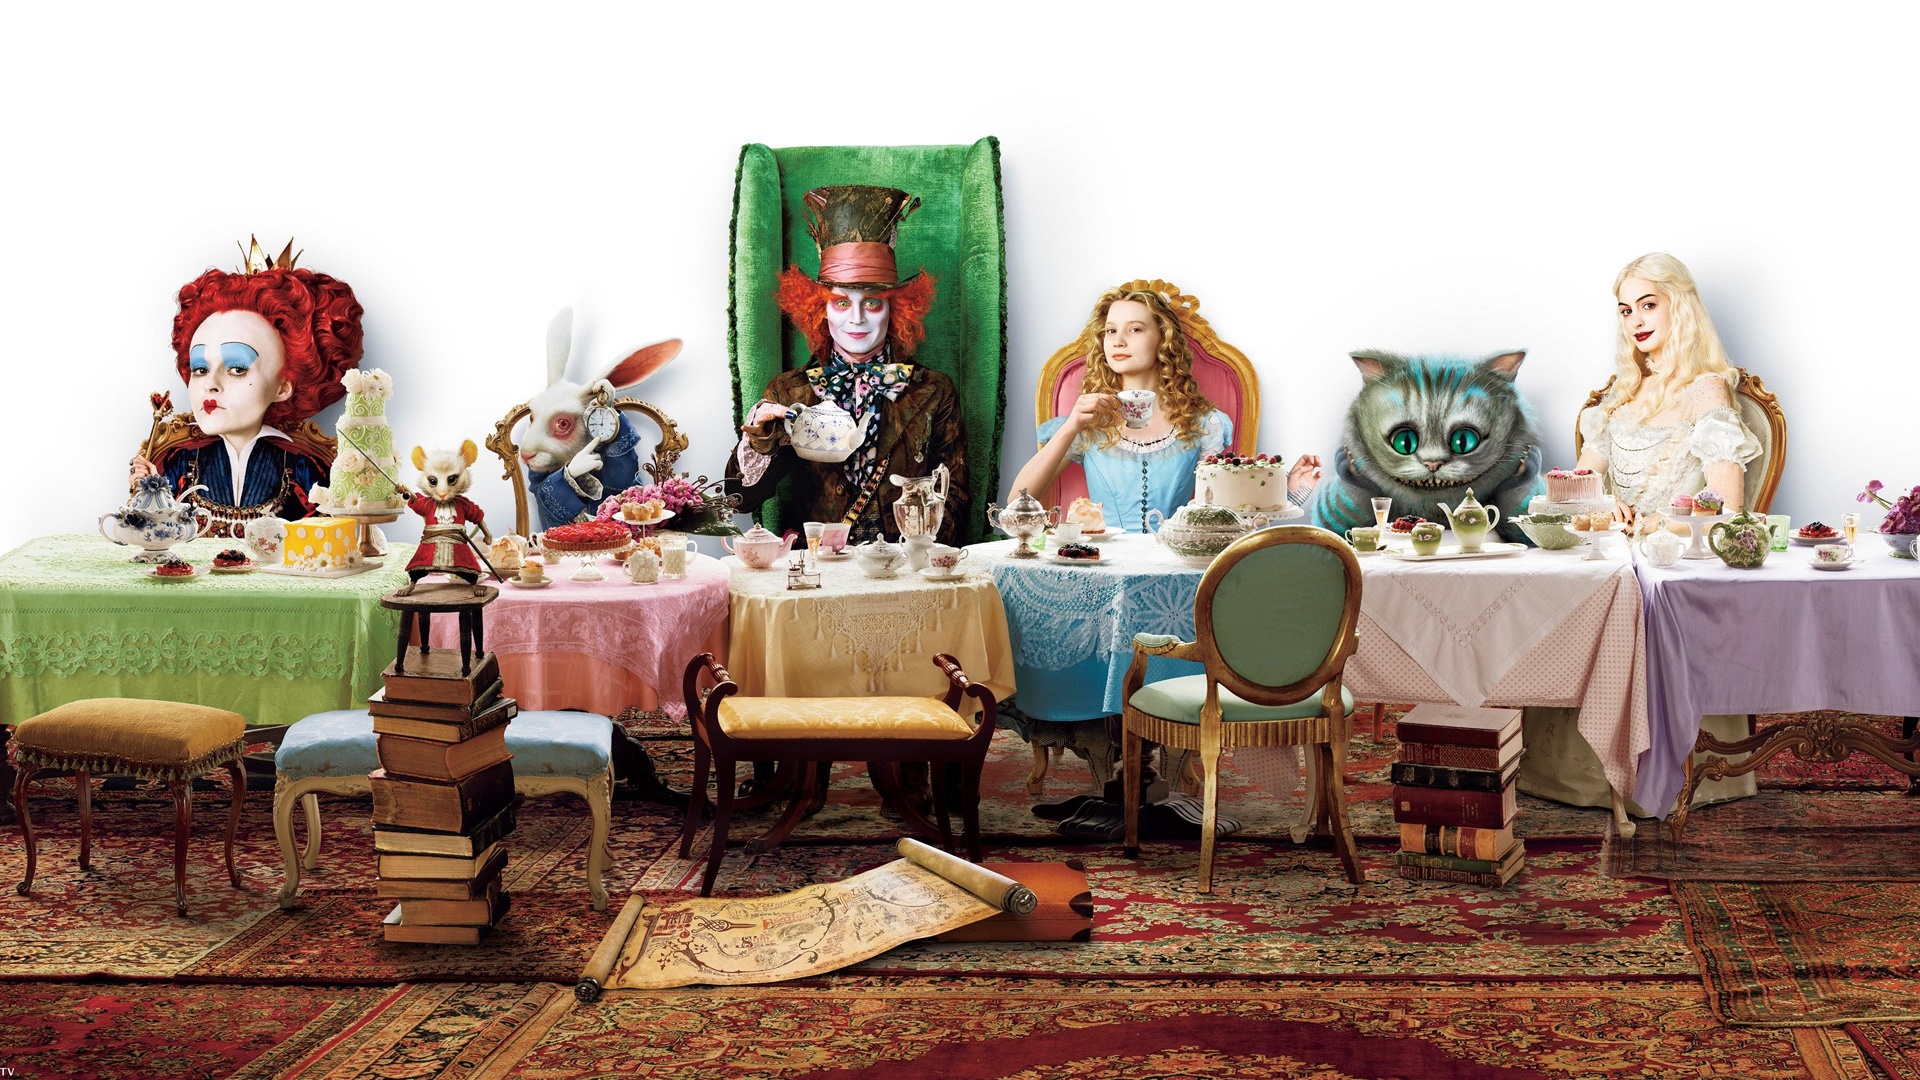 Alice in Wonderland (2010) Picture